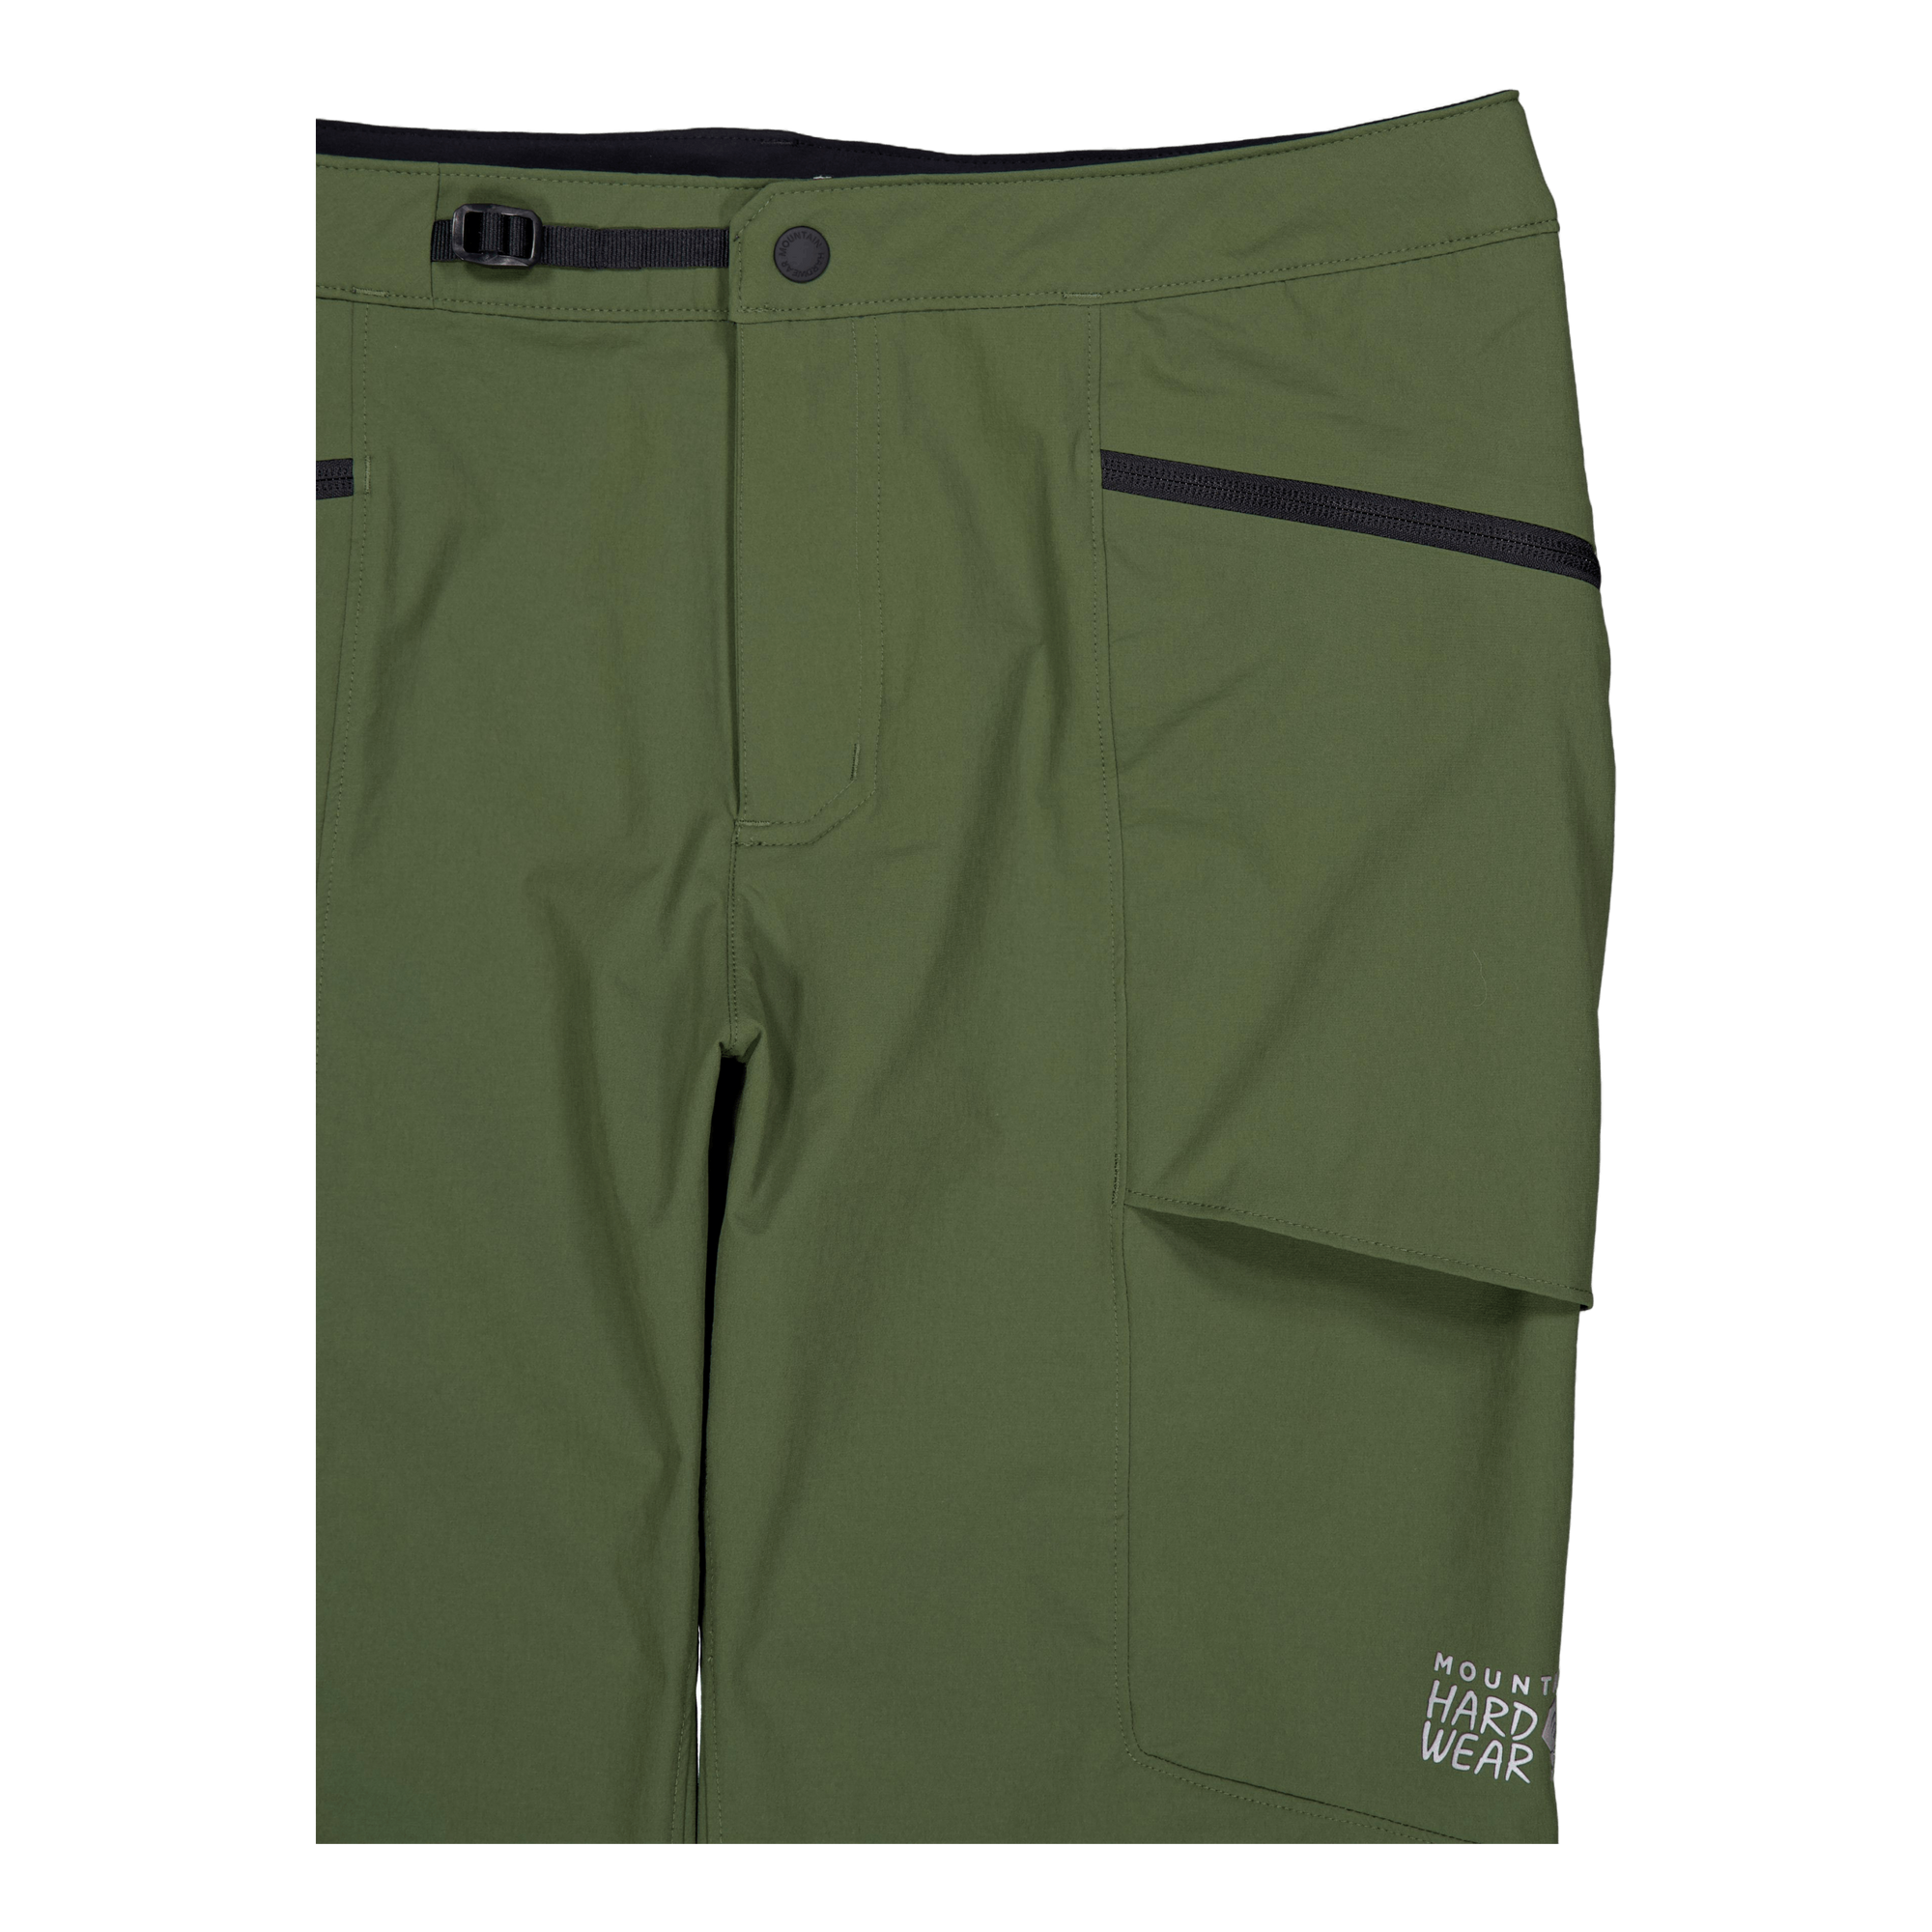 Chockstone™ Alpine Lt Pant Surplus Green